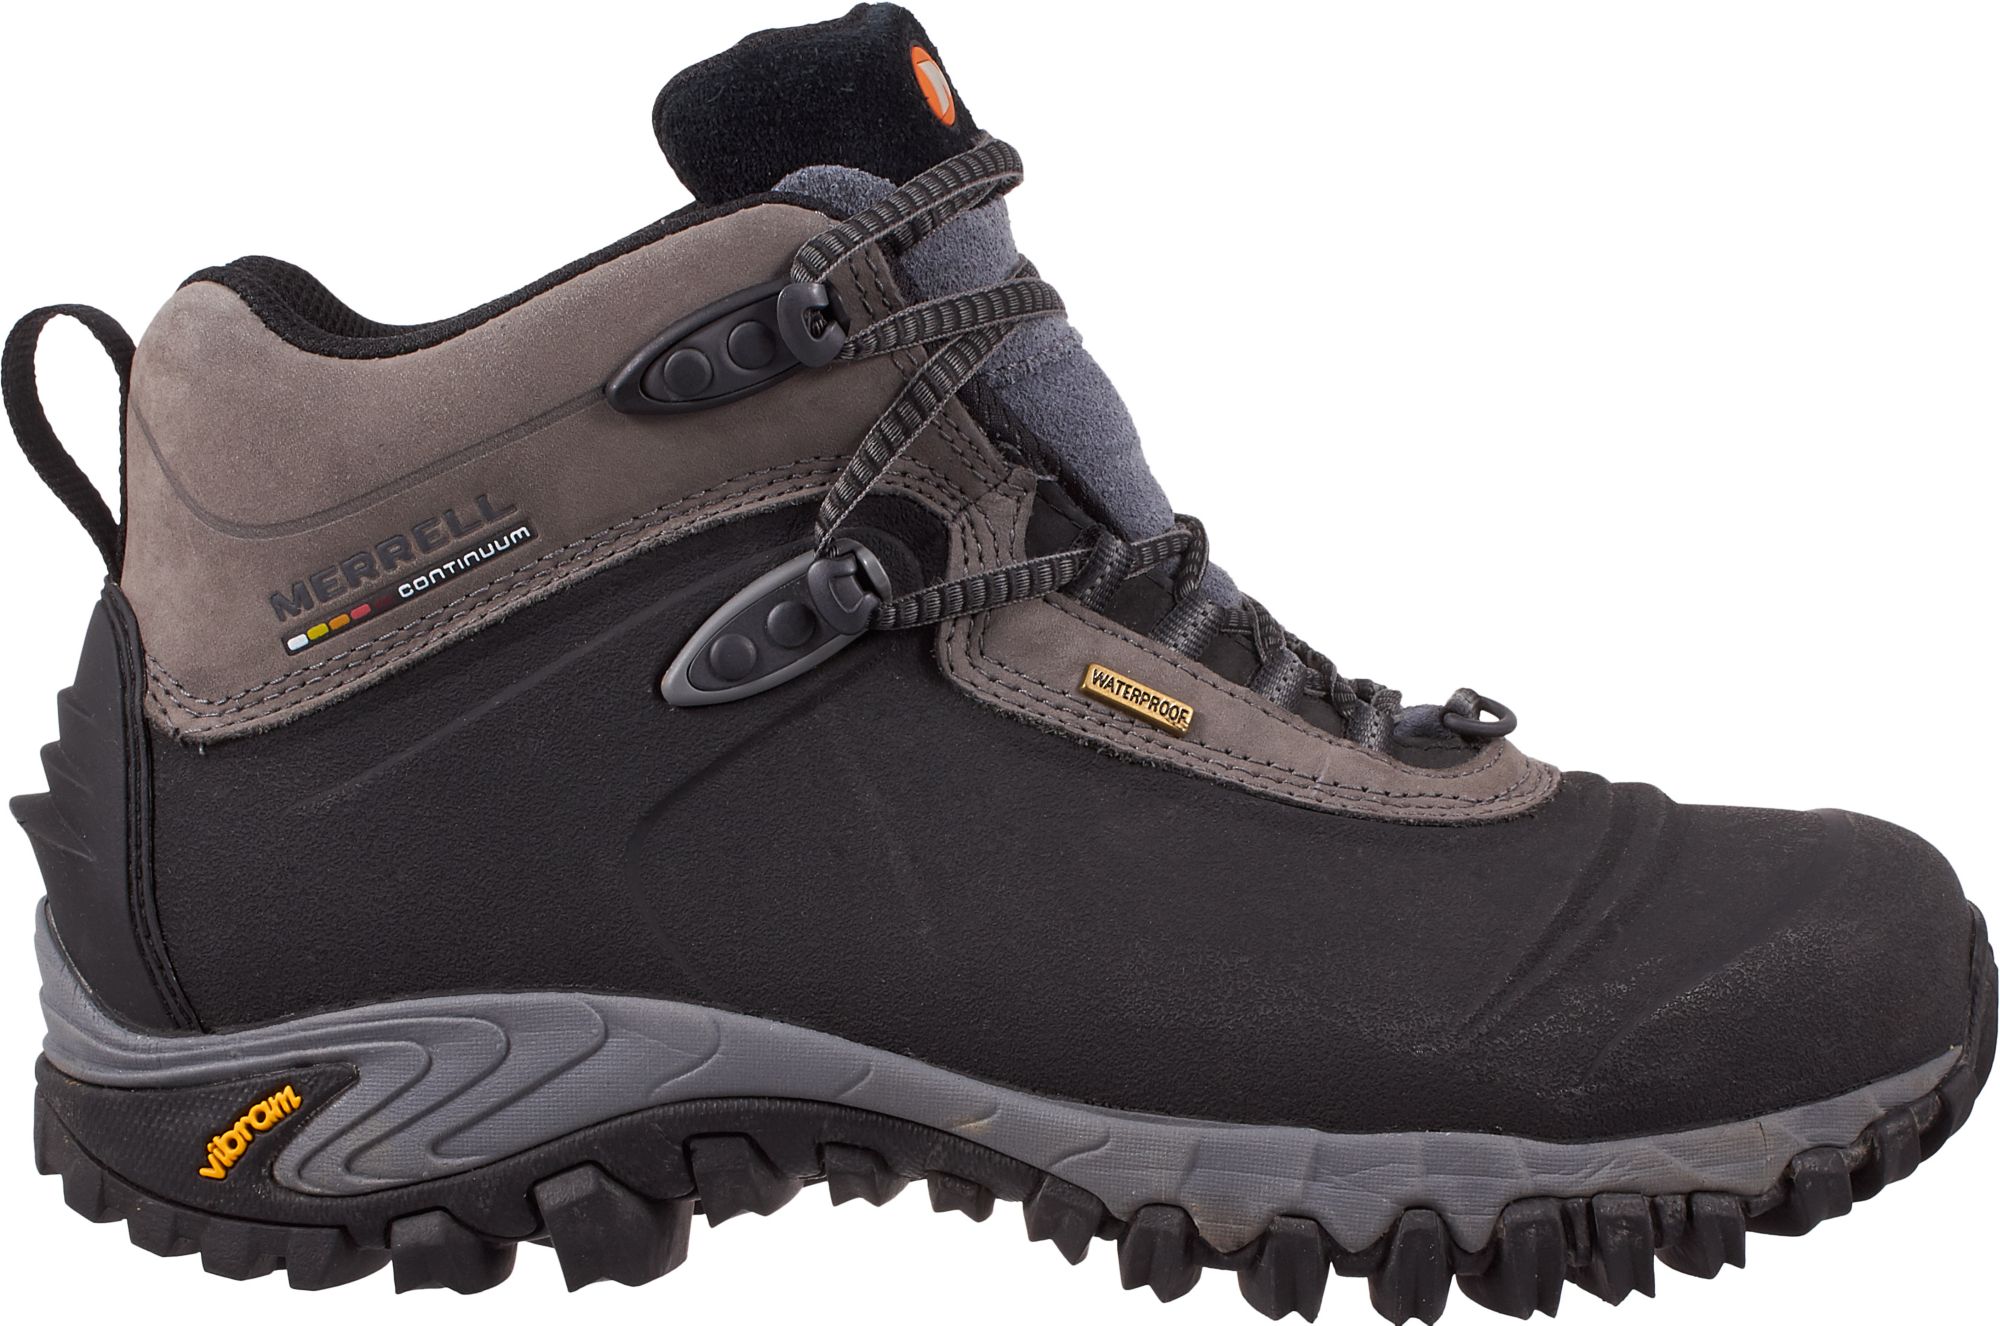 Merrell Men's Thermo 6” Waterproof 200g Winter Boots | DICK'S ...